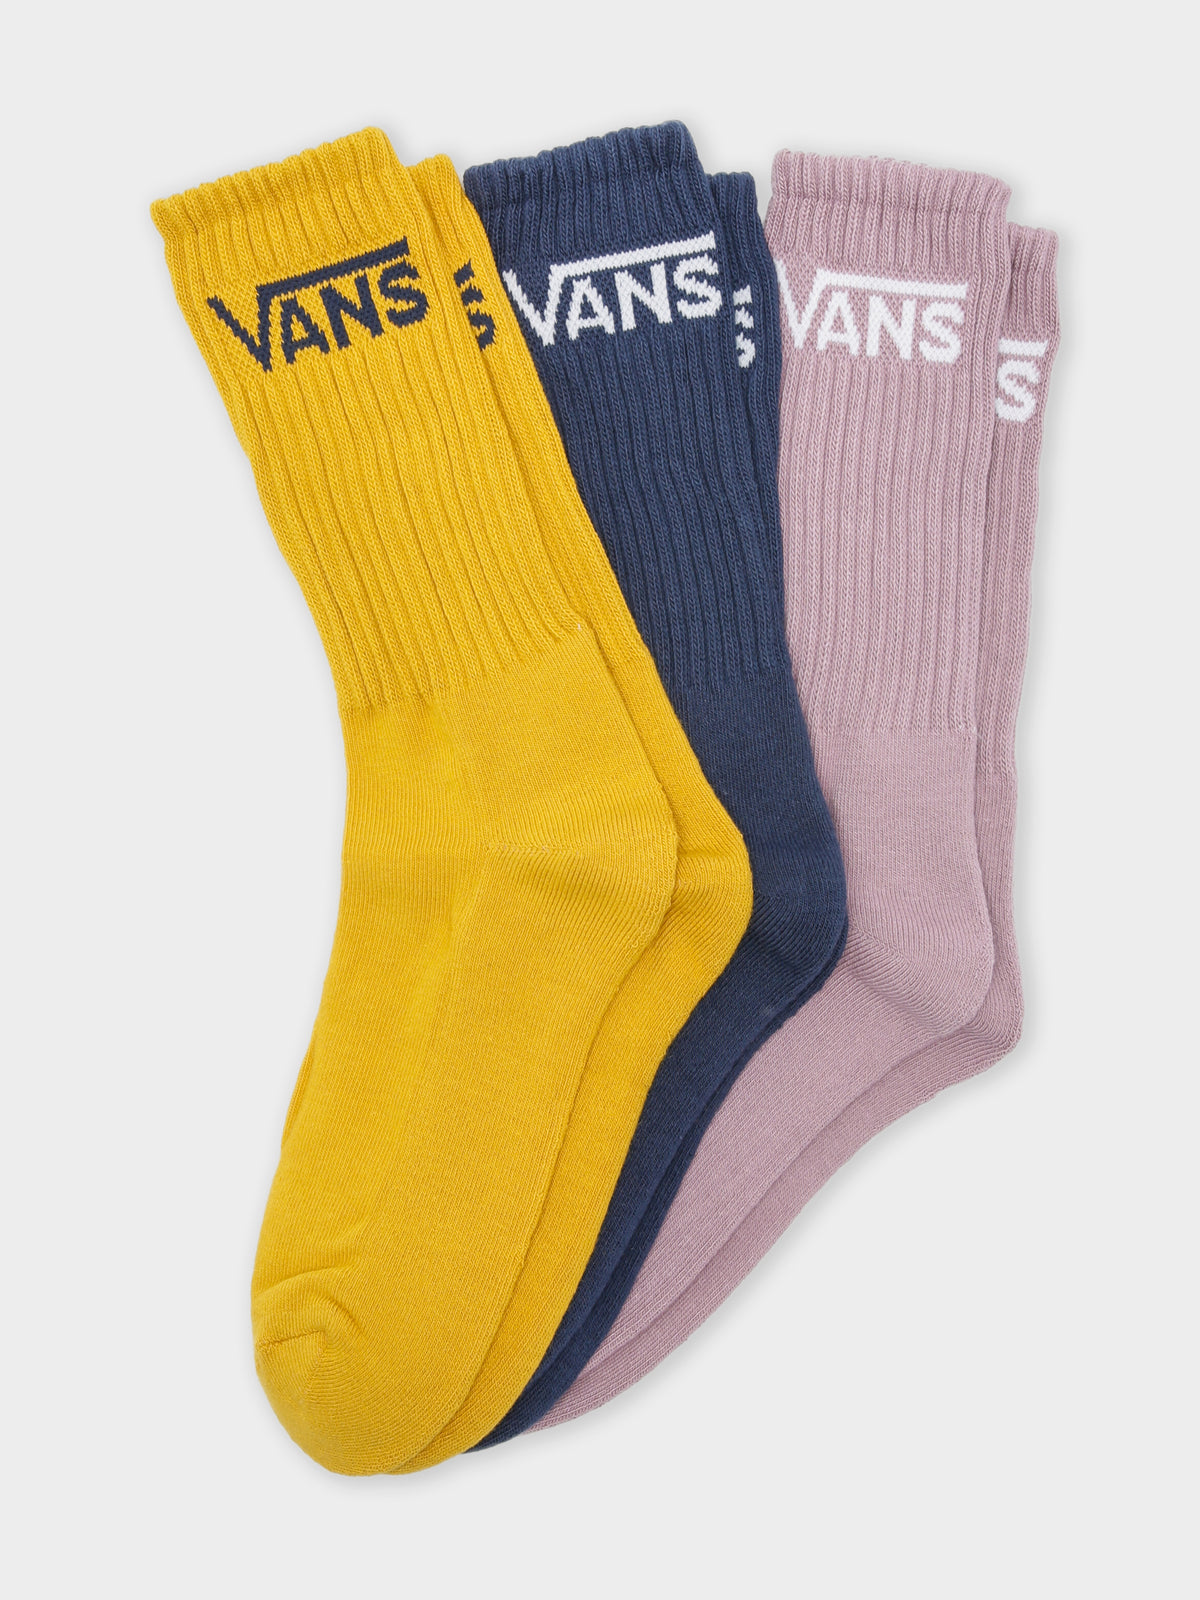 3 Pairs of Classic Crew Socks (Size 6.5-9) in Yellow, Black &amp; Purple